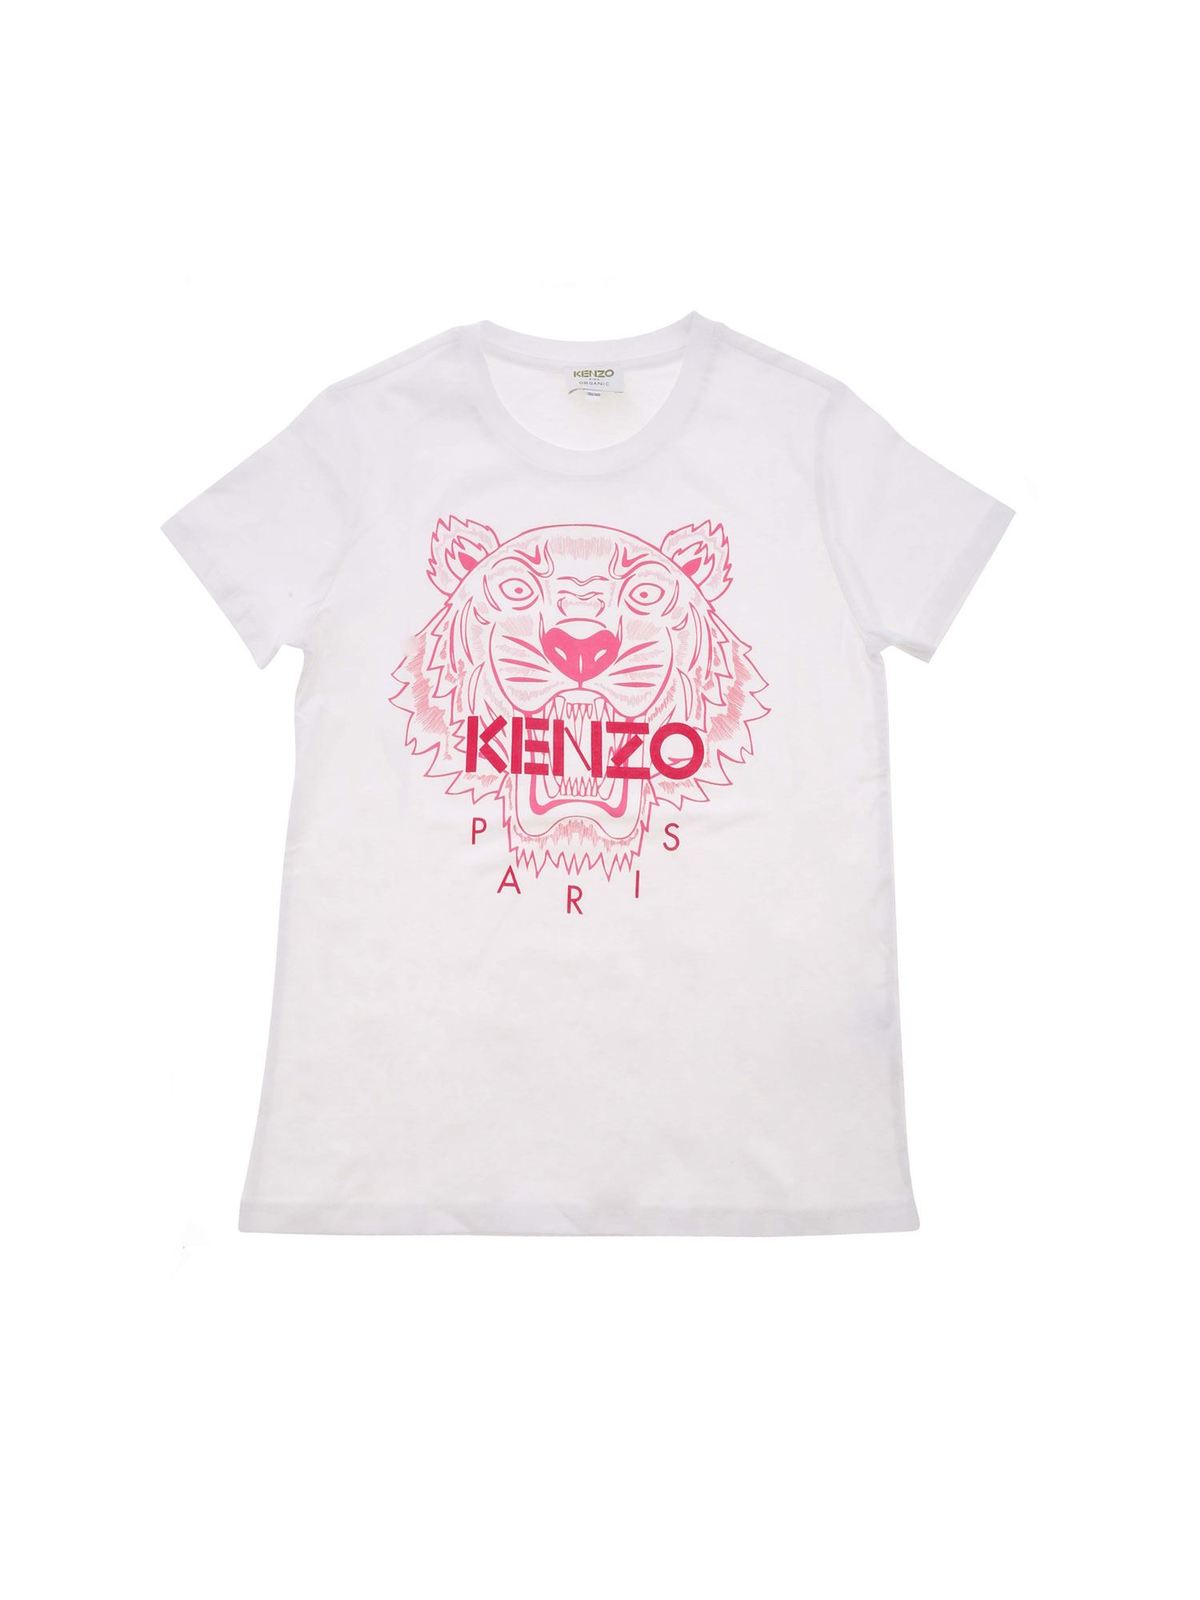 Fugtighed Regn Lånte T-shirts Kenzo - Tiger T-shirt in white and pink - KR1023801P | iKRIX.com